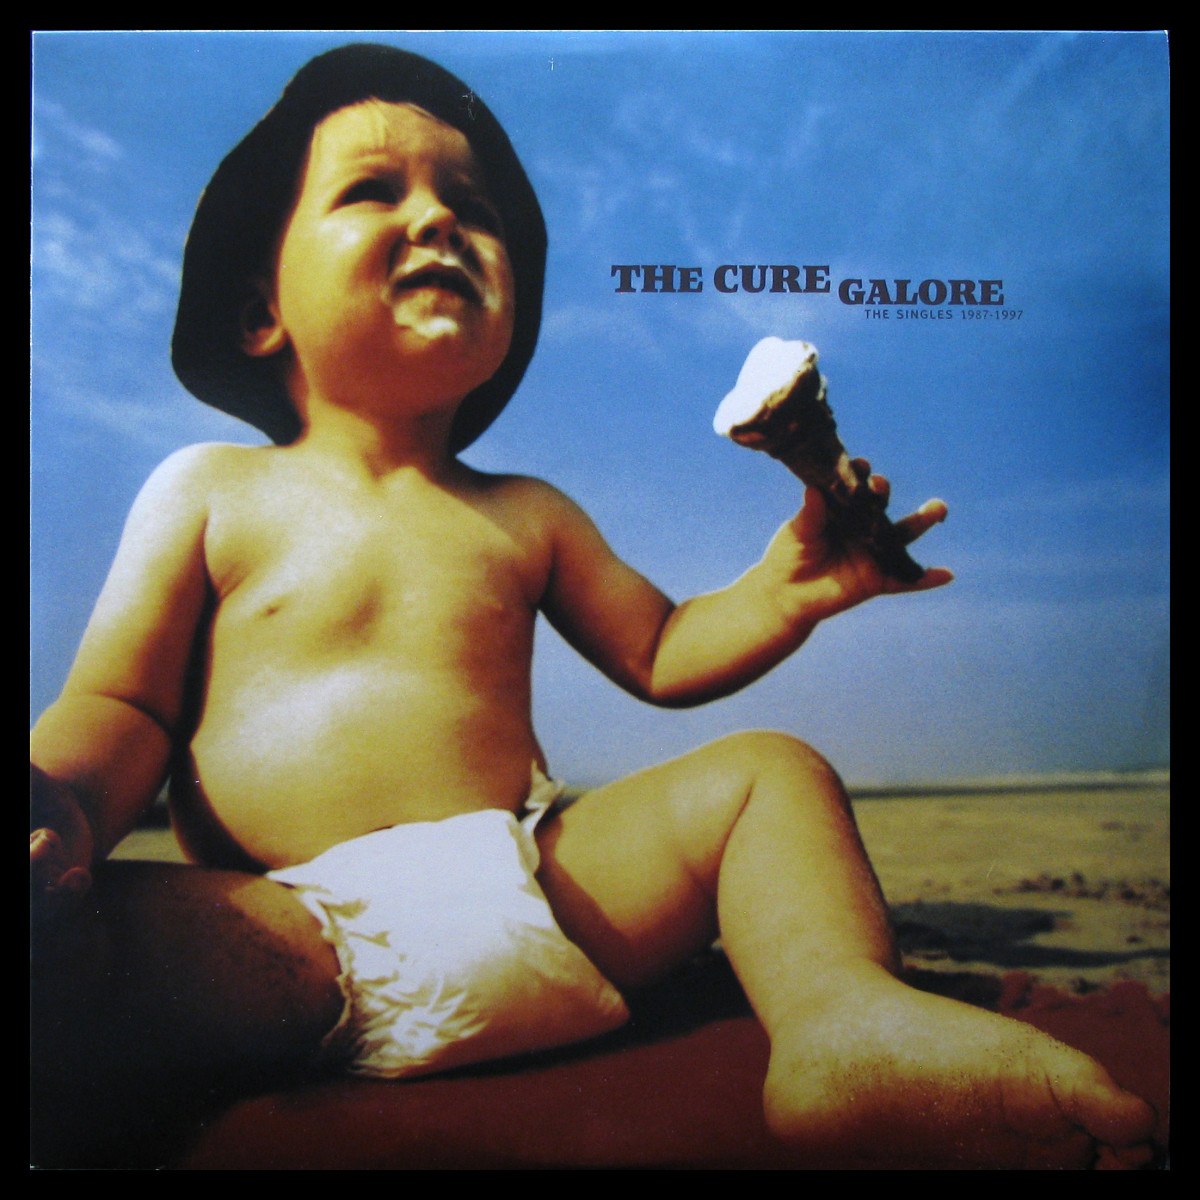 Galore (The Singles 1987-1997)